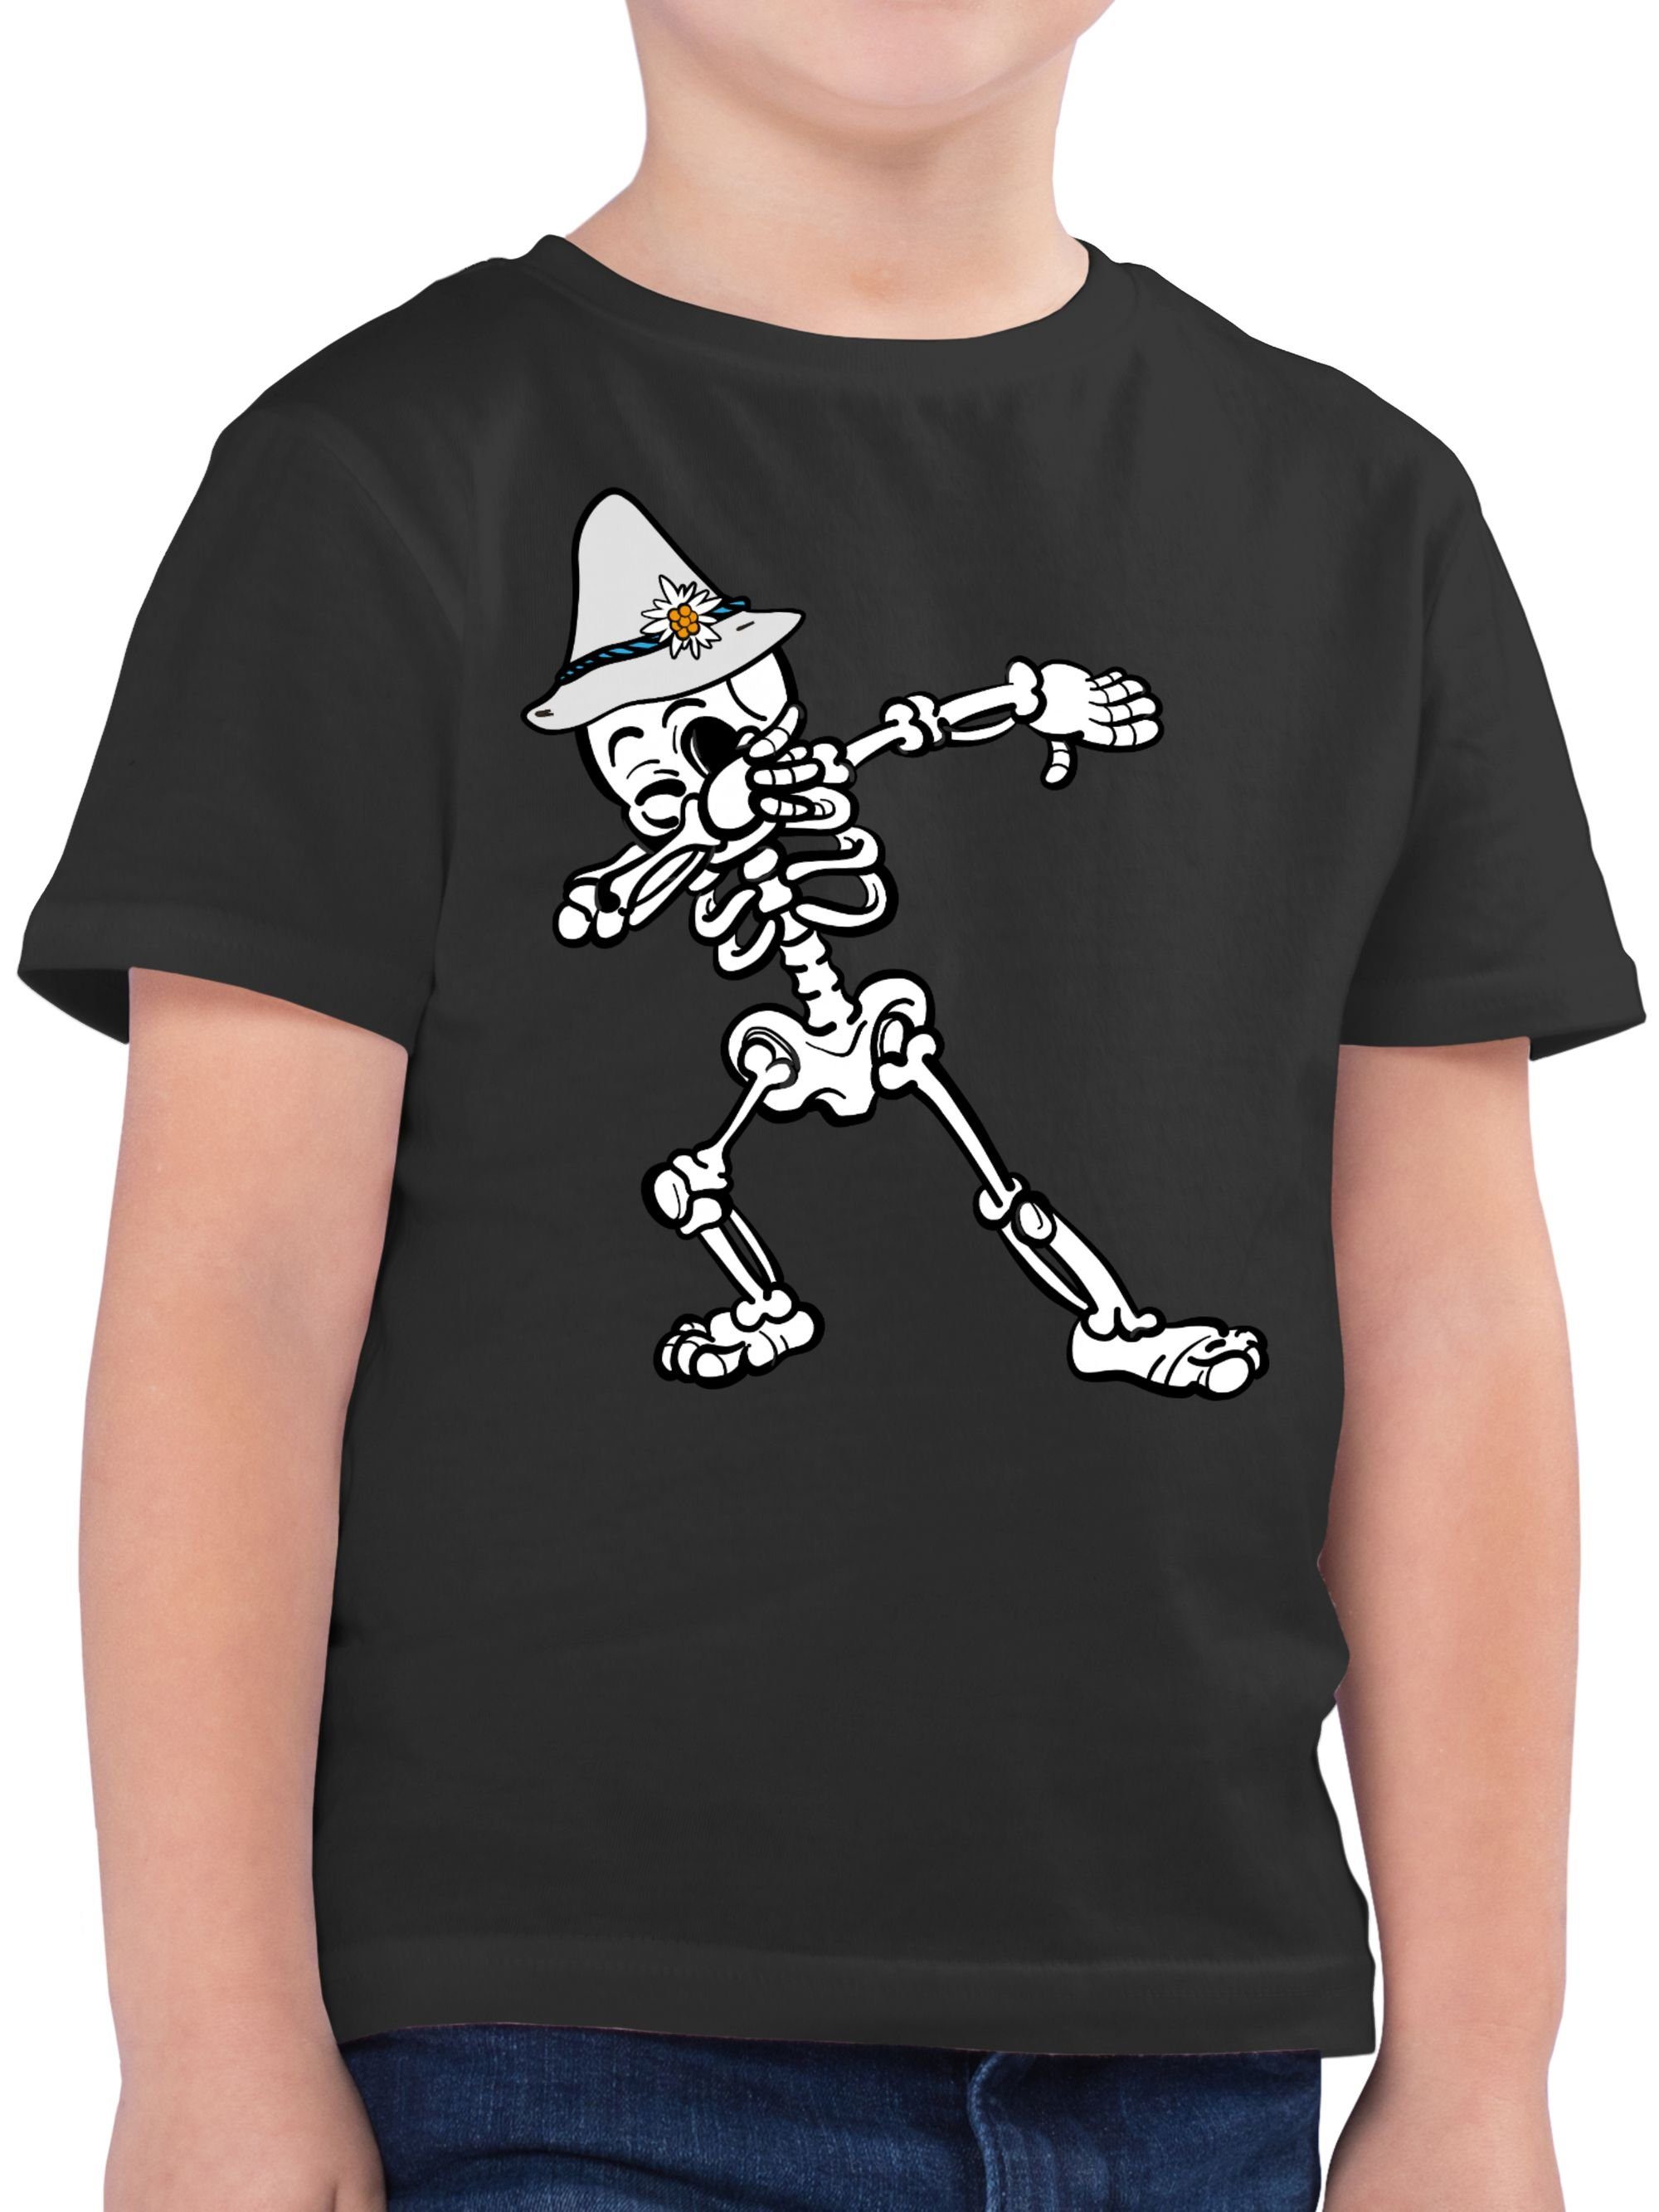 Shirtracer T-Shirt Skelett Dab Wiesn Junge Mode für Oktoberfest Kinder Outfit 3 Anthrazit